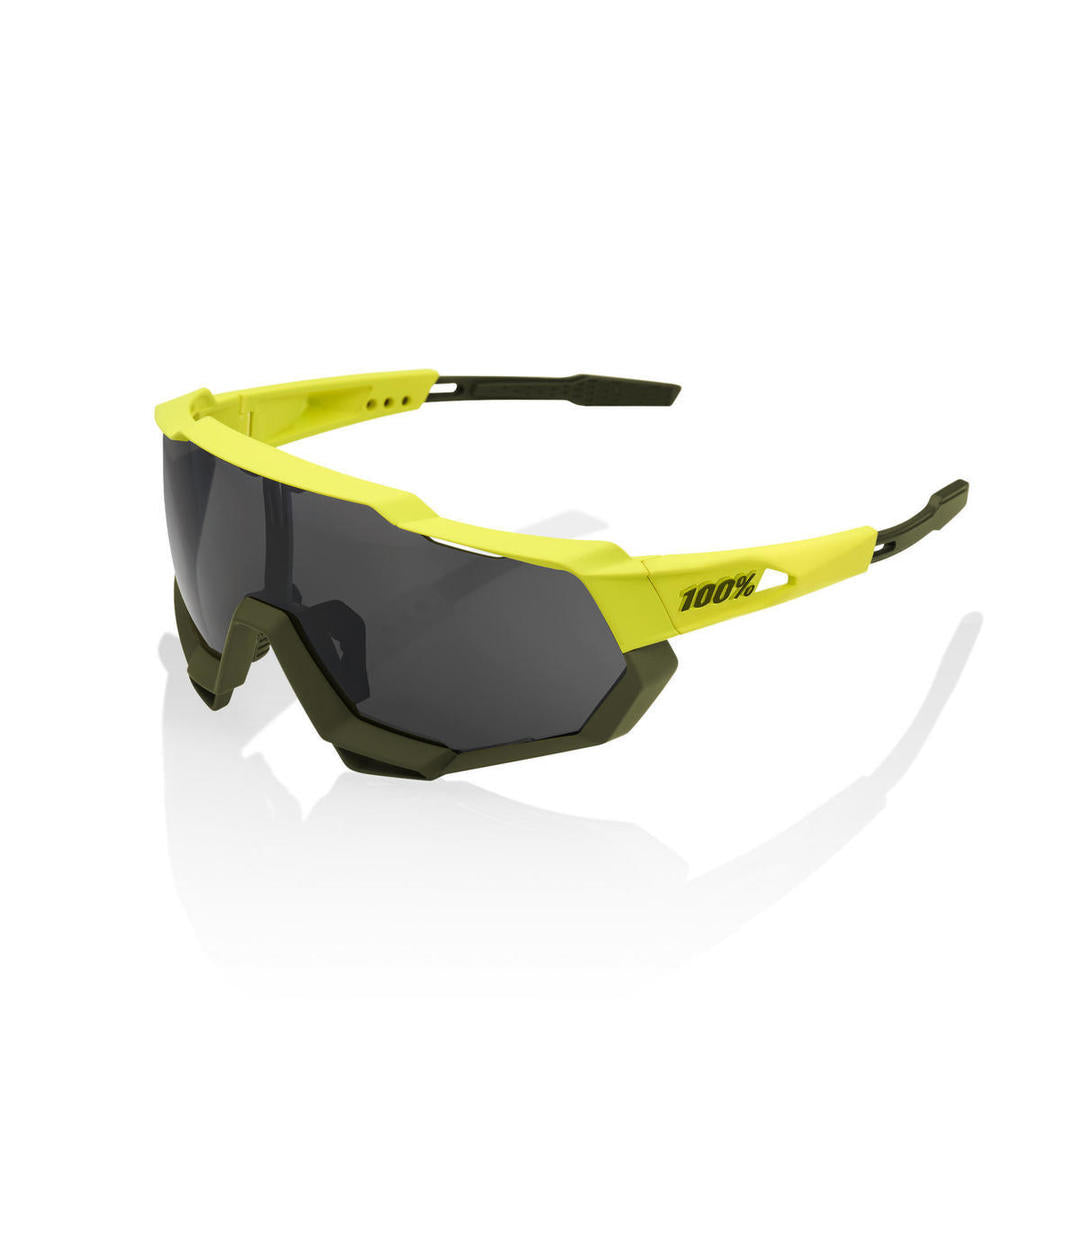 RIDE 100% Sonnenbrillen Speedtrap Soft Tact - Bananenschwarze Spiegelgläser